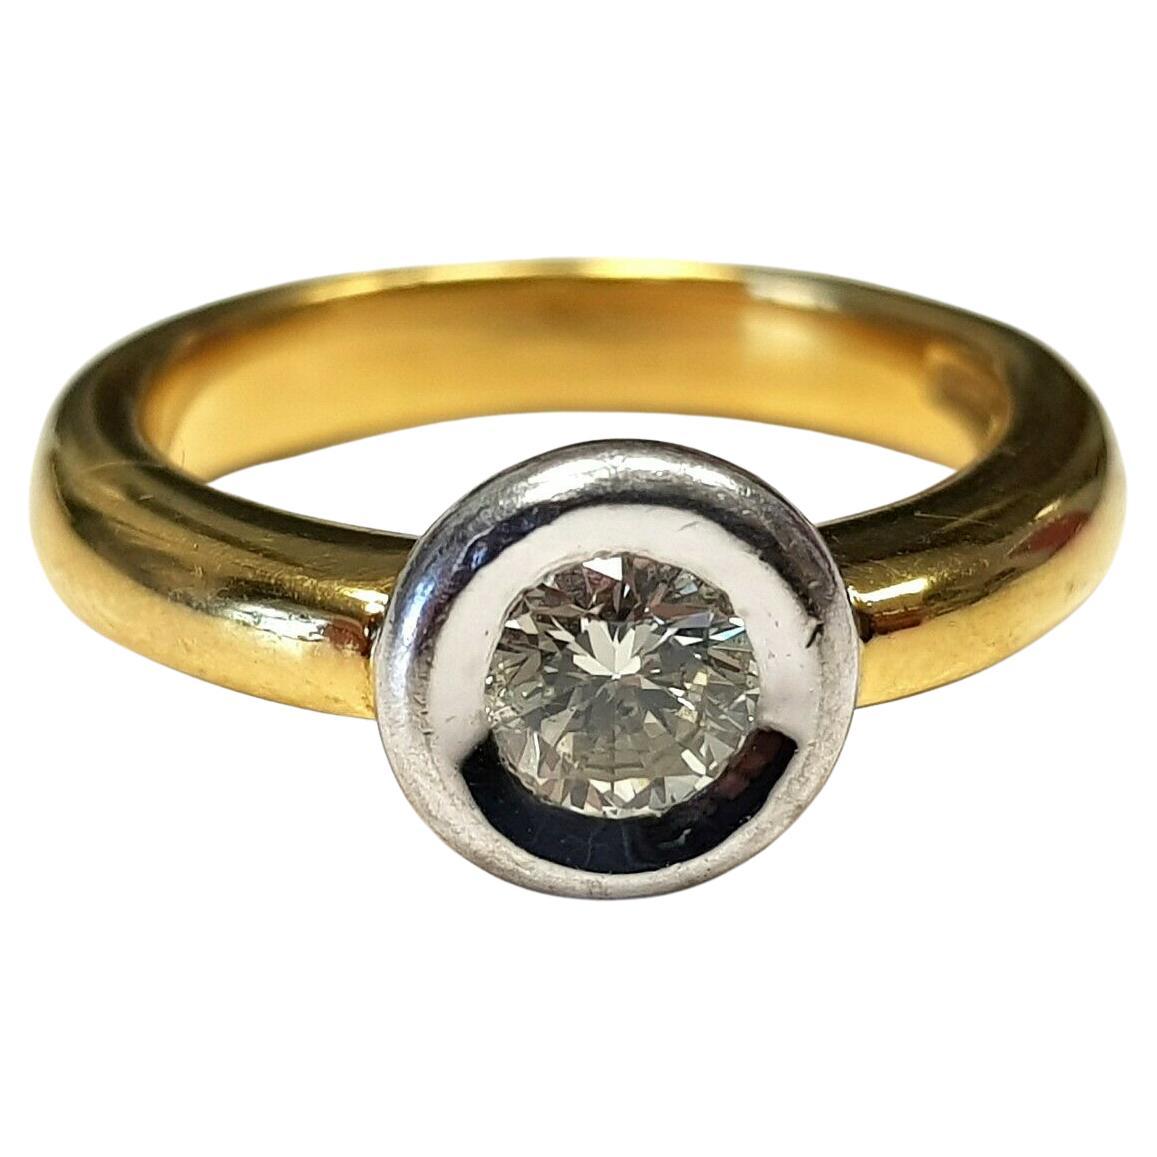 Wempe 18k 2 Tone Diamond Wedding Ring Bezel Set